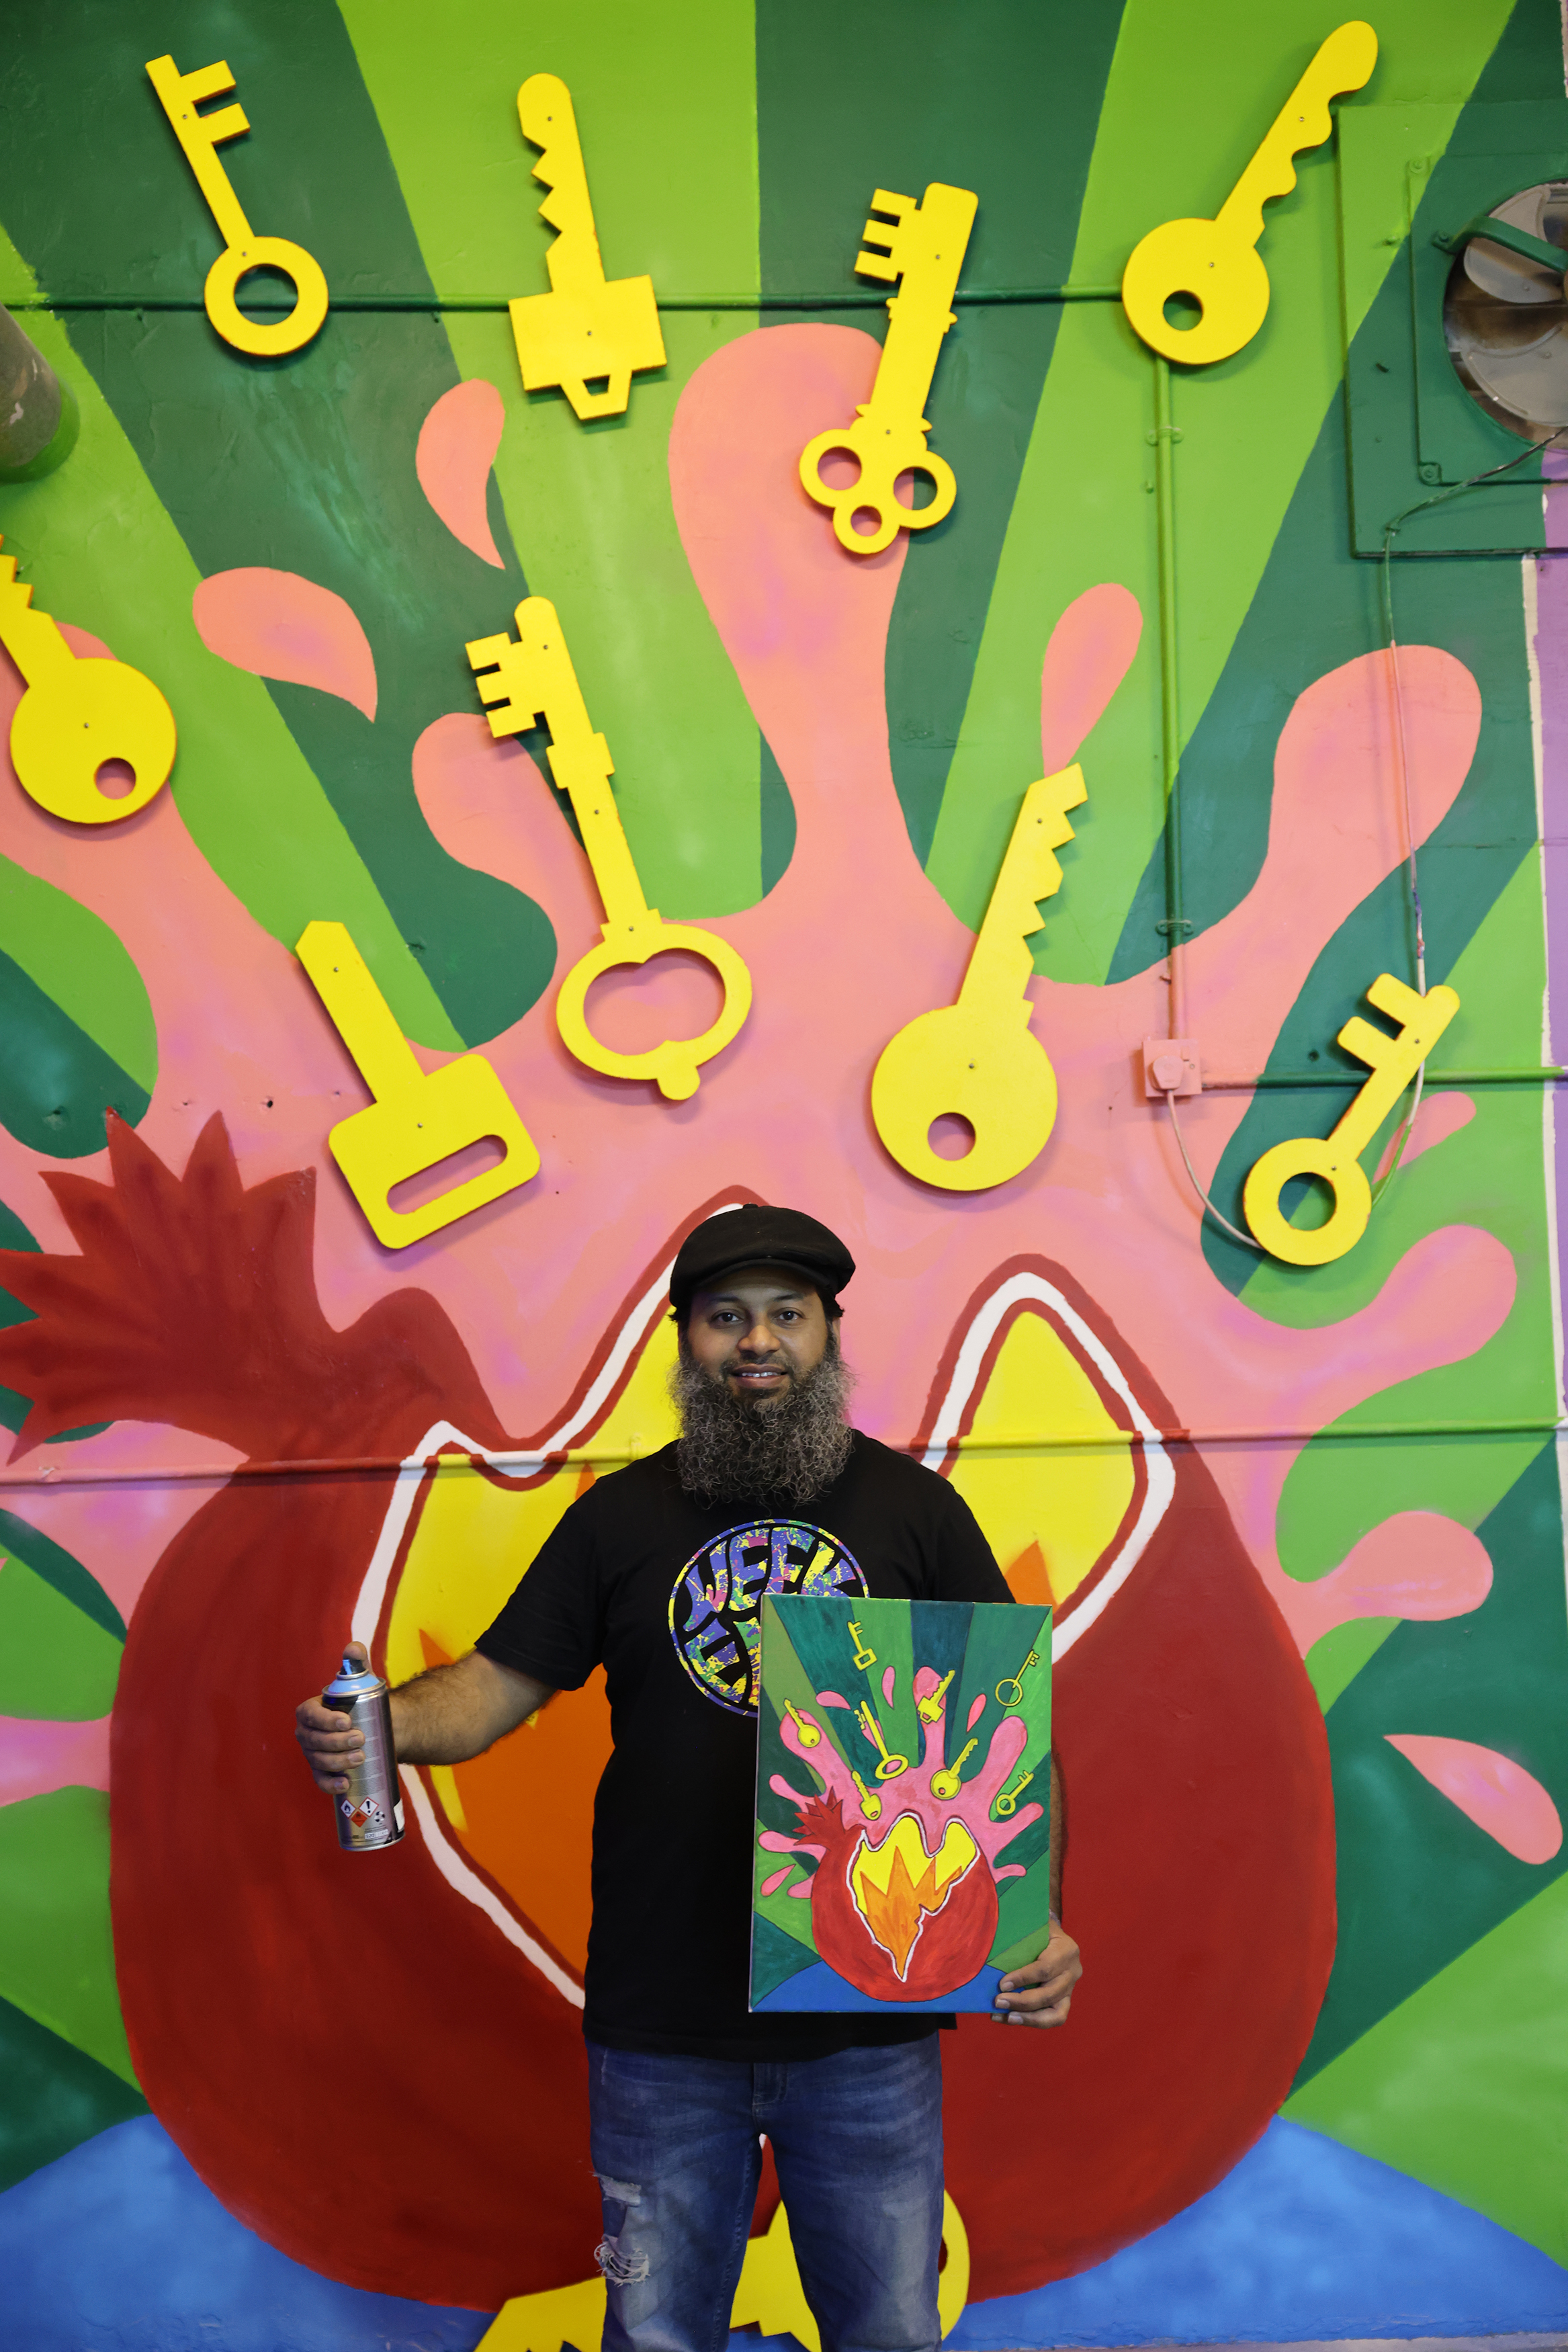 Kuwait Times editor showcases artistic talents through mural